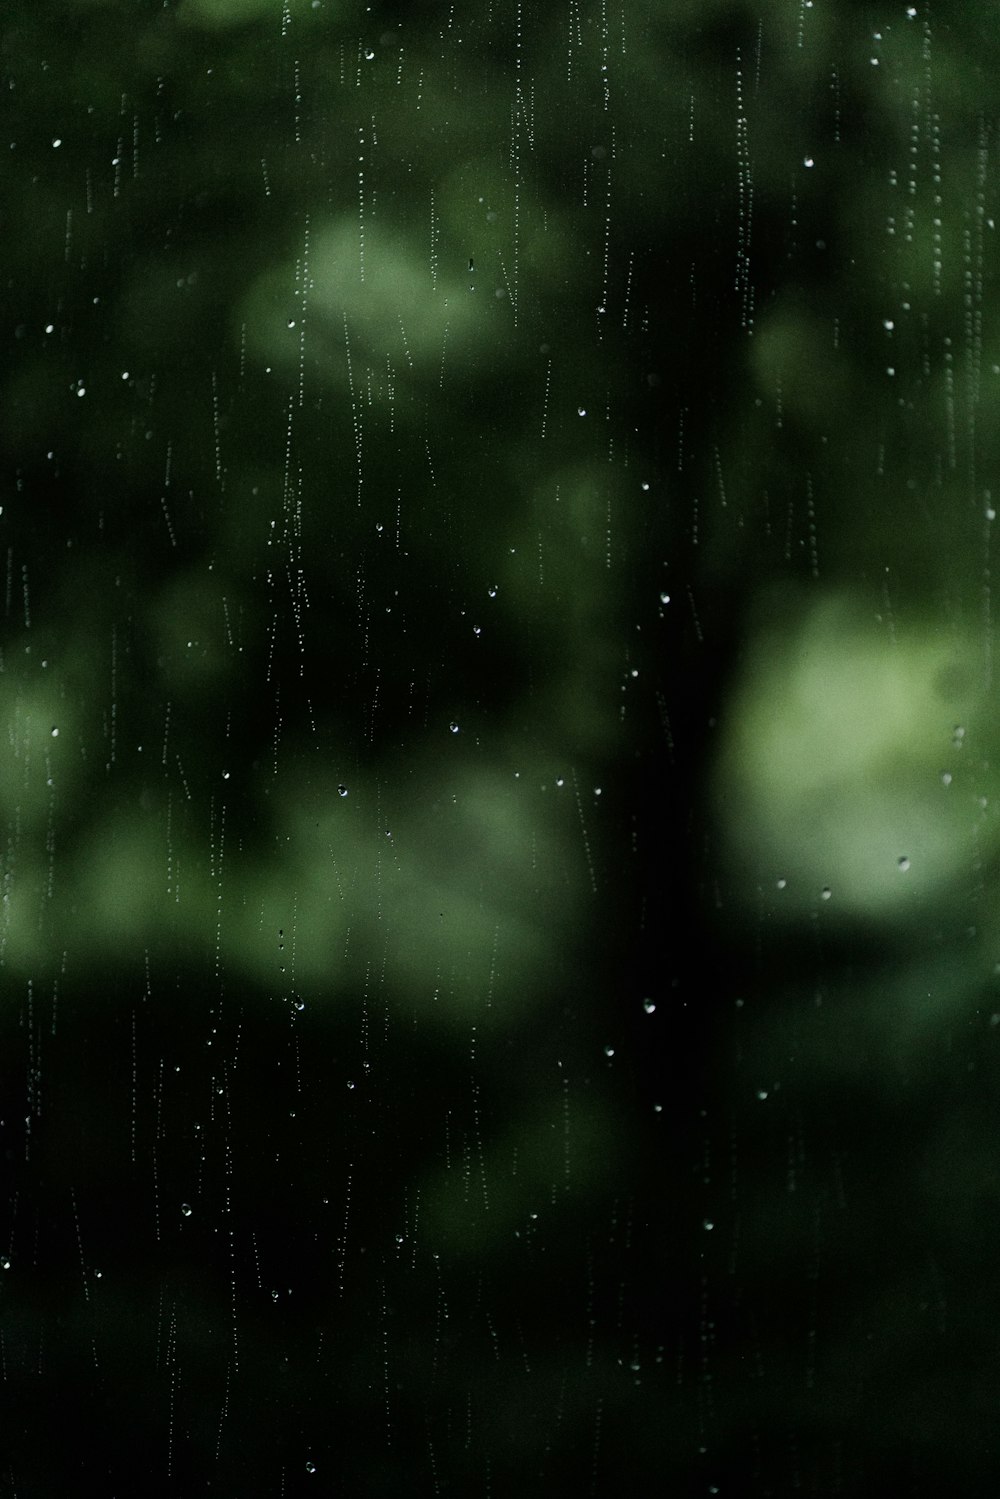 a close up of rain drops on a window